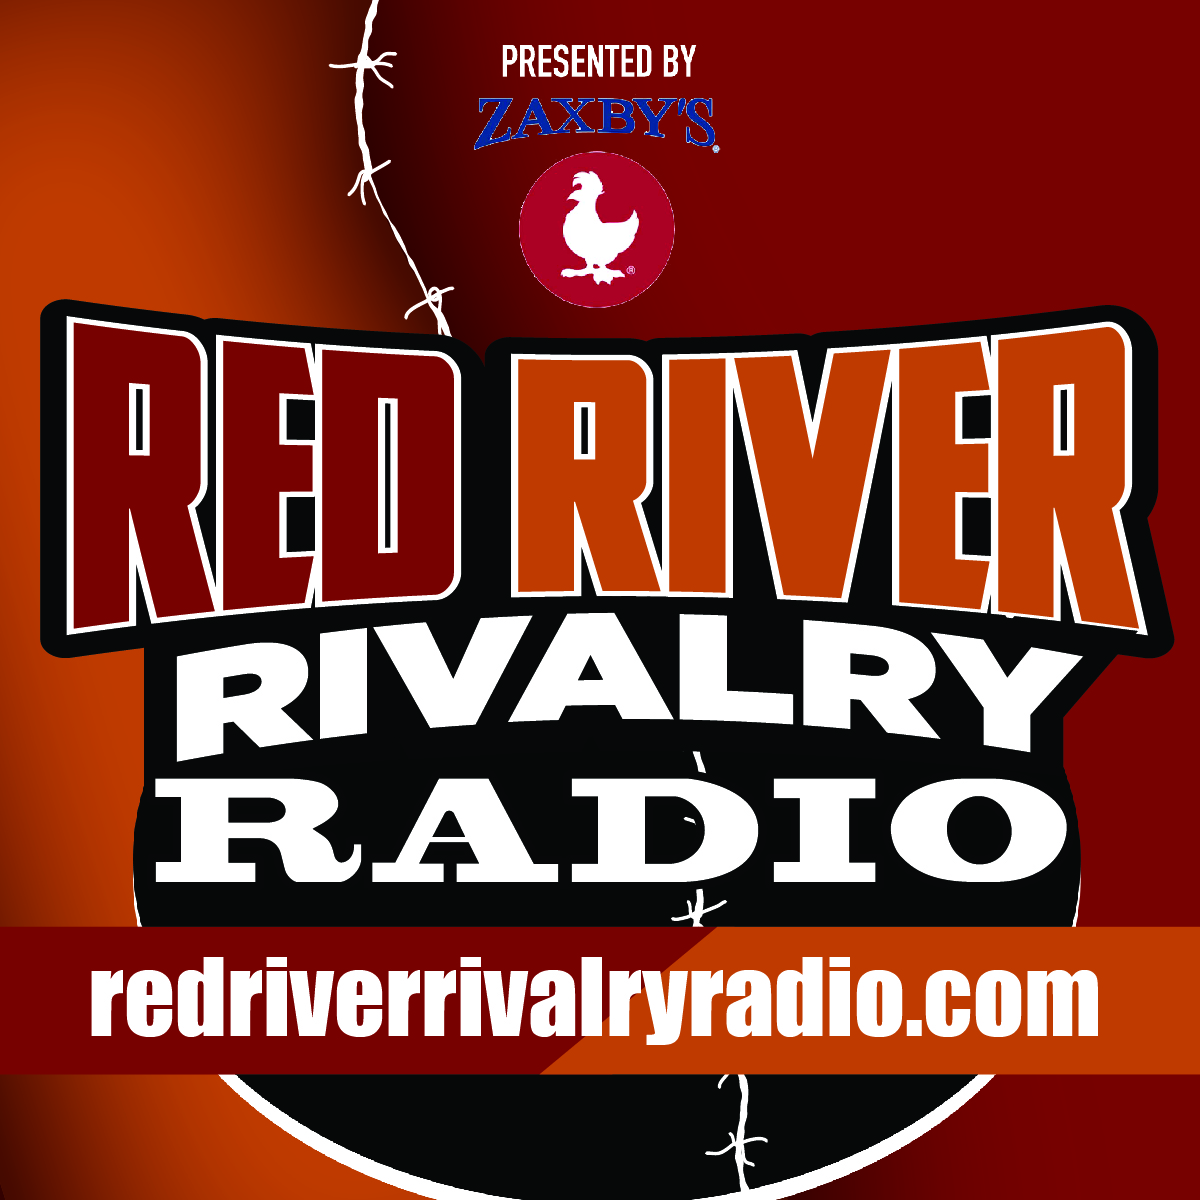 Red River Rivalry - 2008